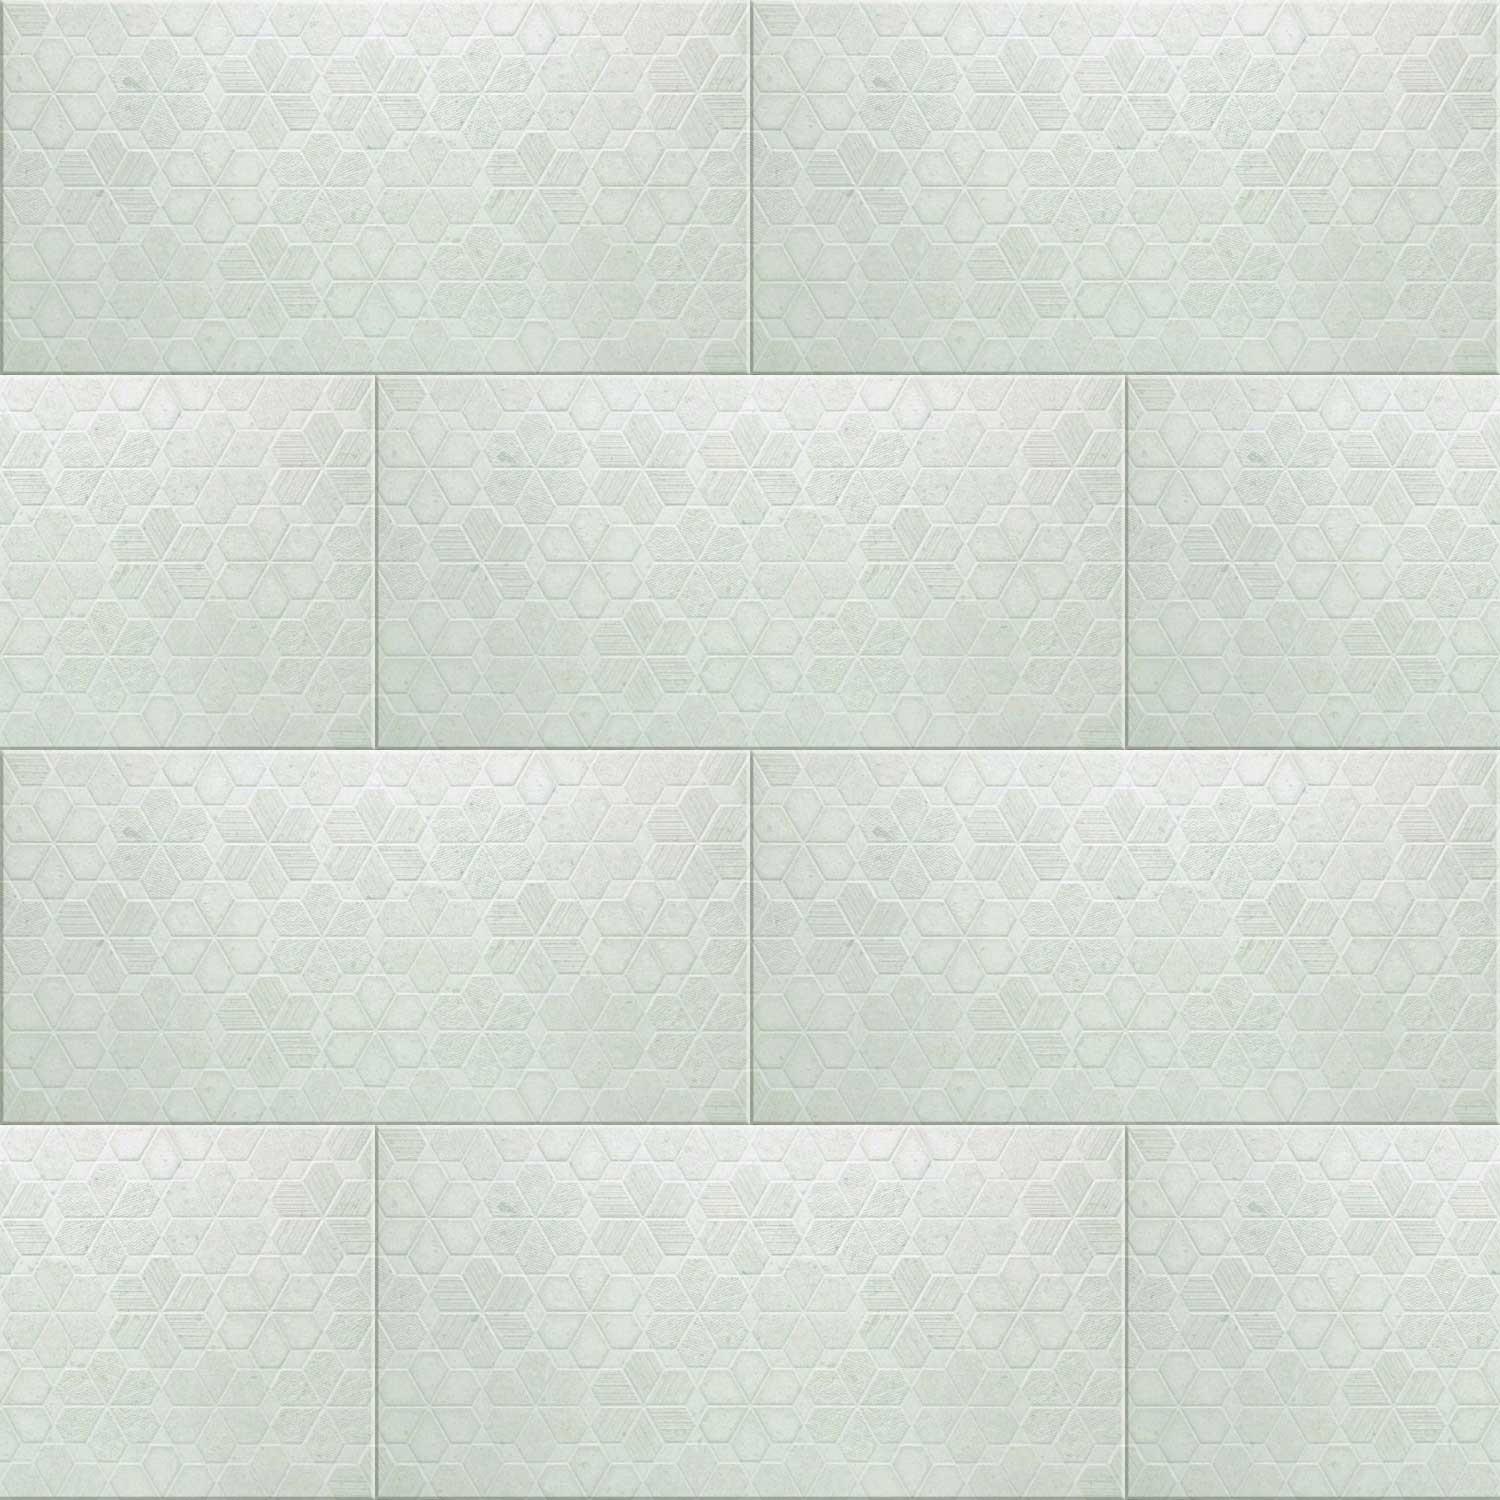 Ground Decor White Porcelain Tile Walls Floor Indoor R10 300 x 600mm